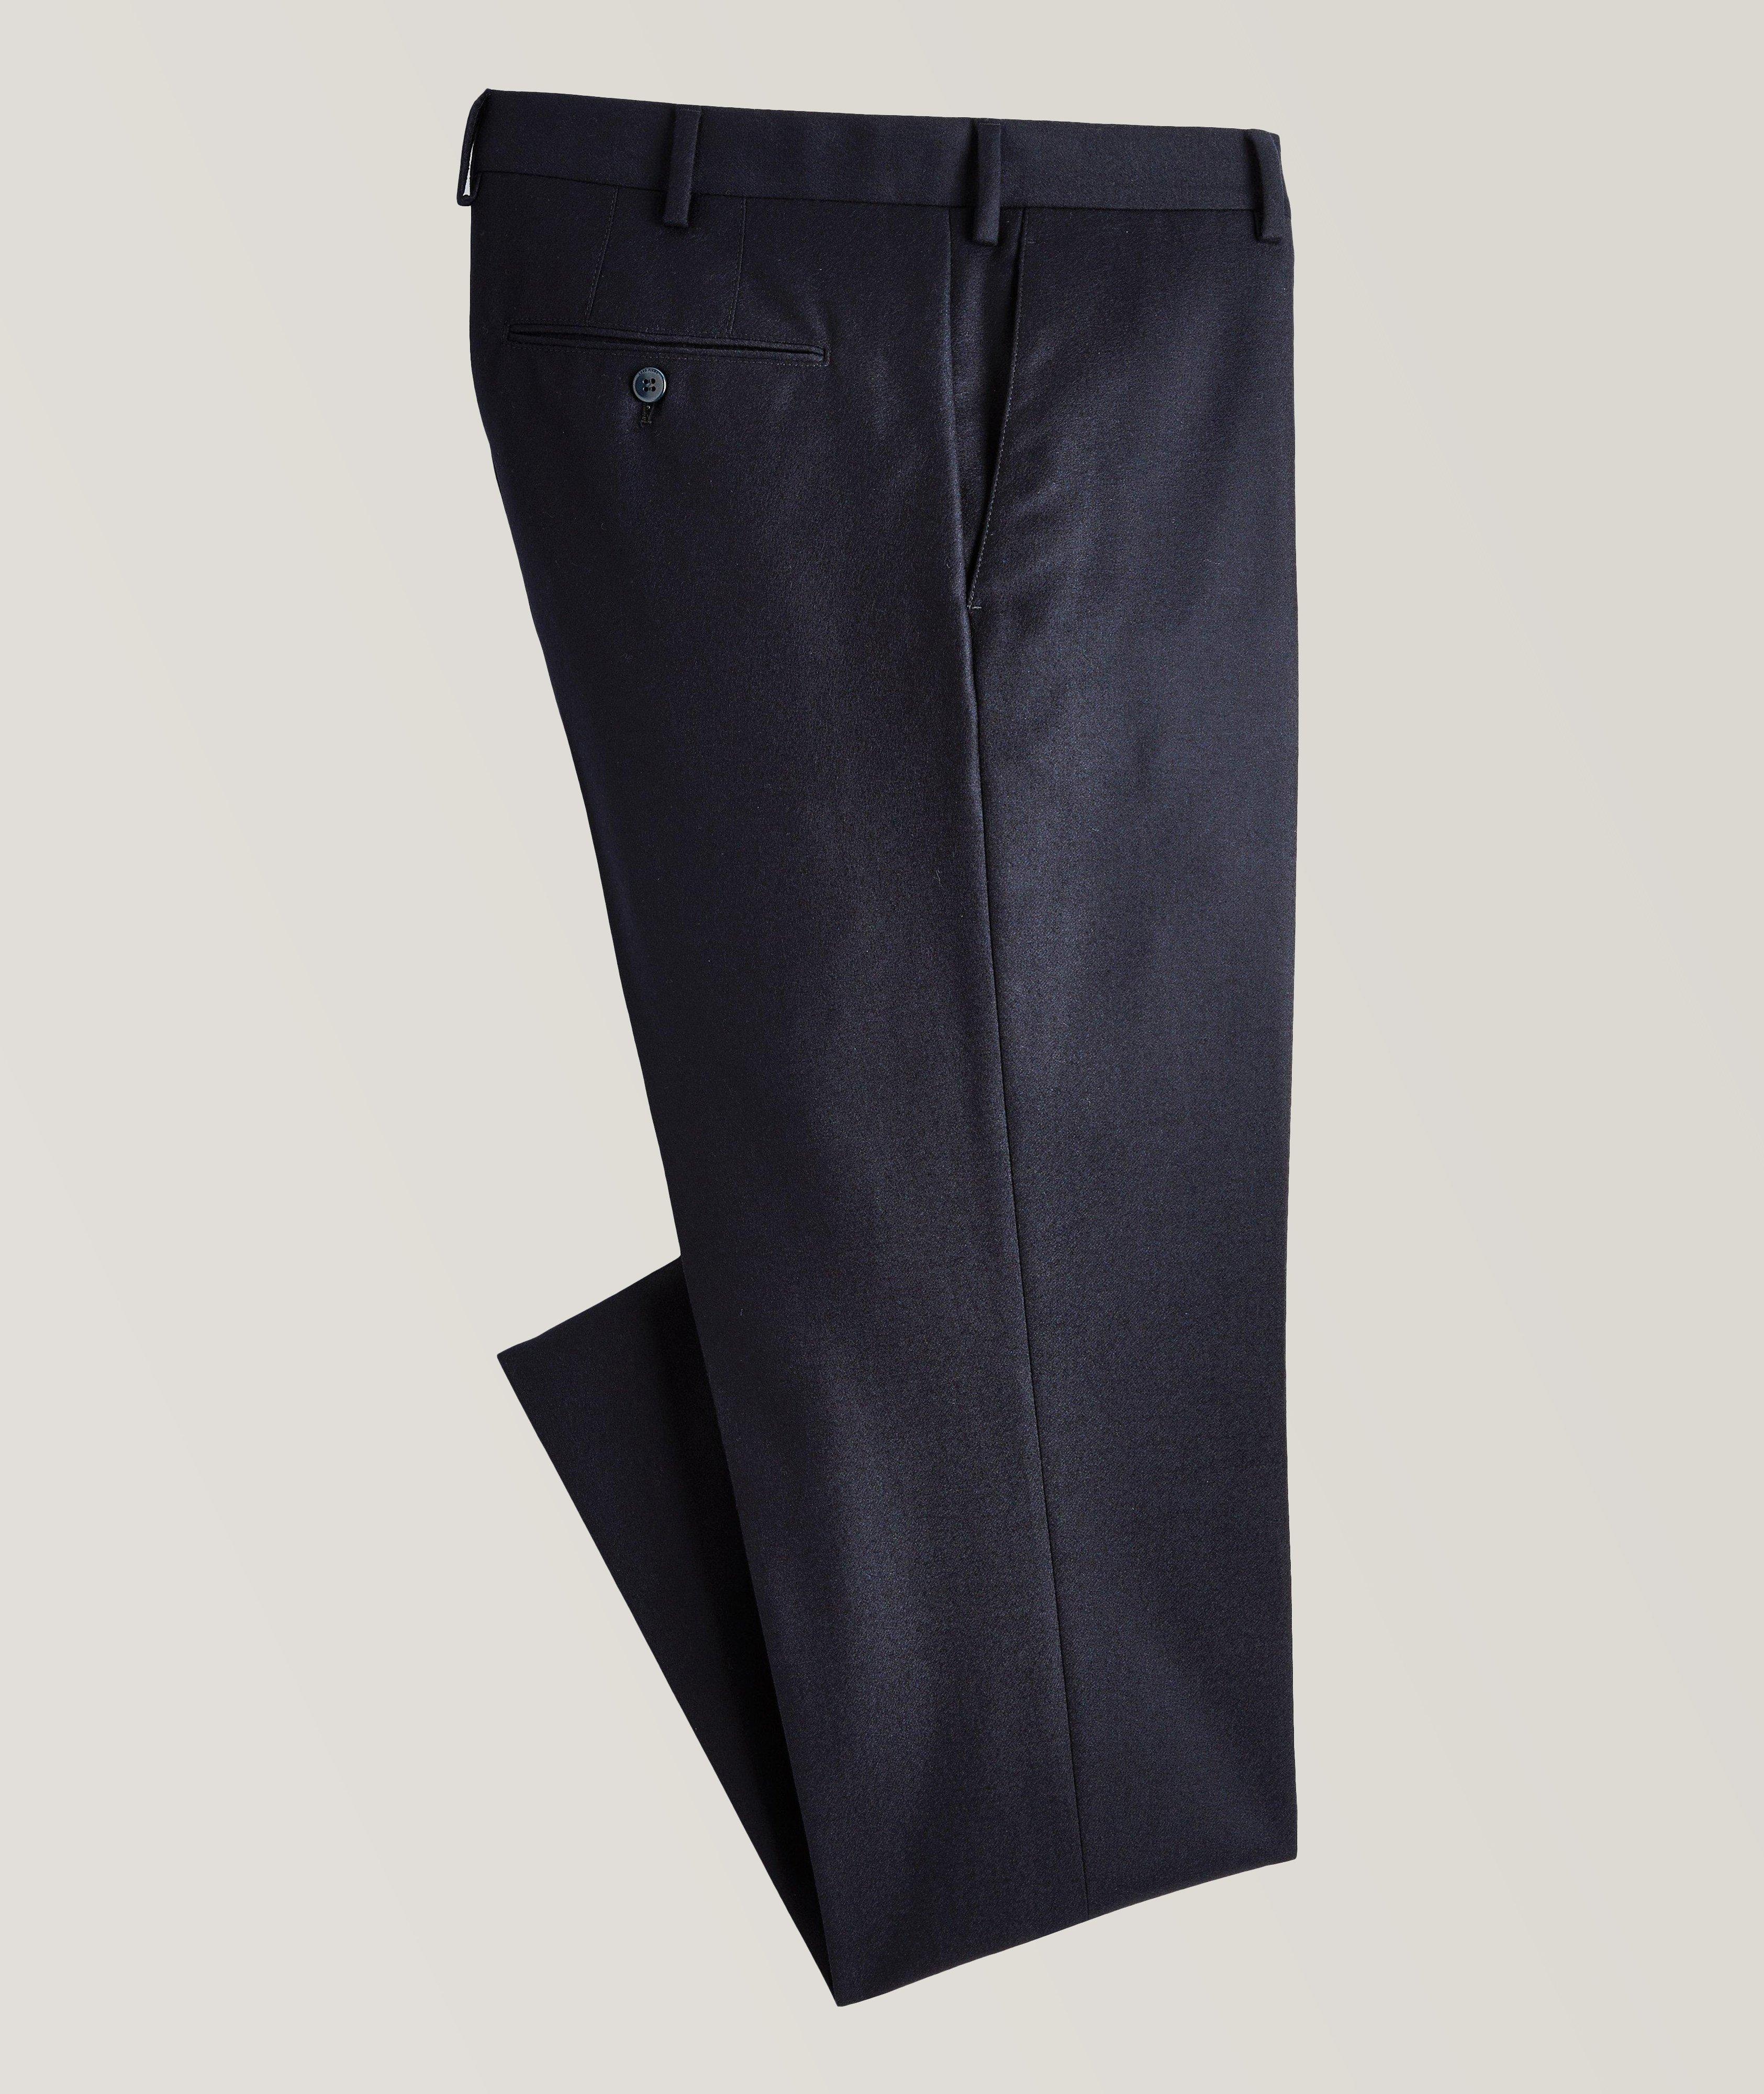 Pantaflat Slim-Fit Wool-Cashmere Dress Pants image 0